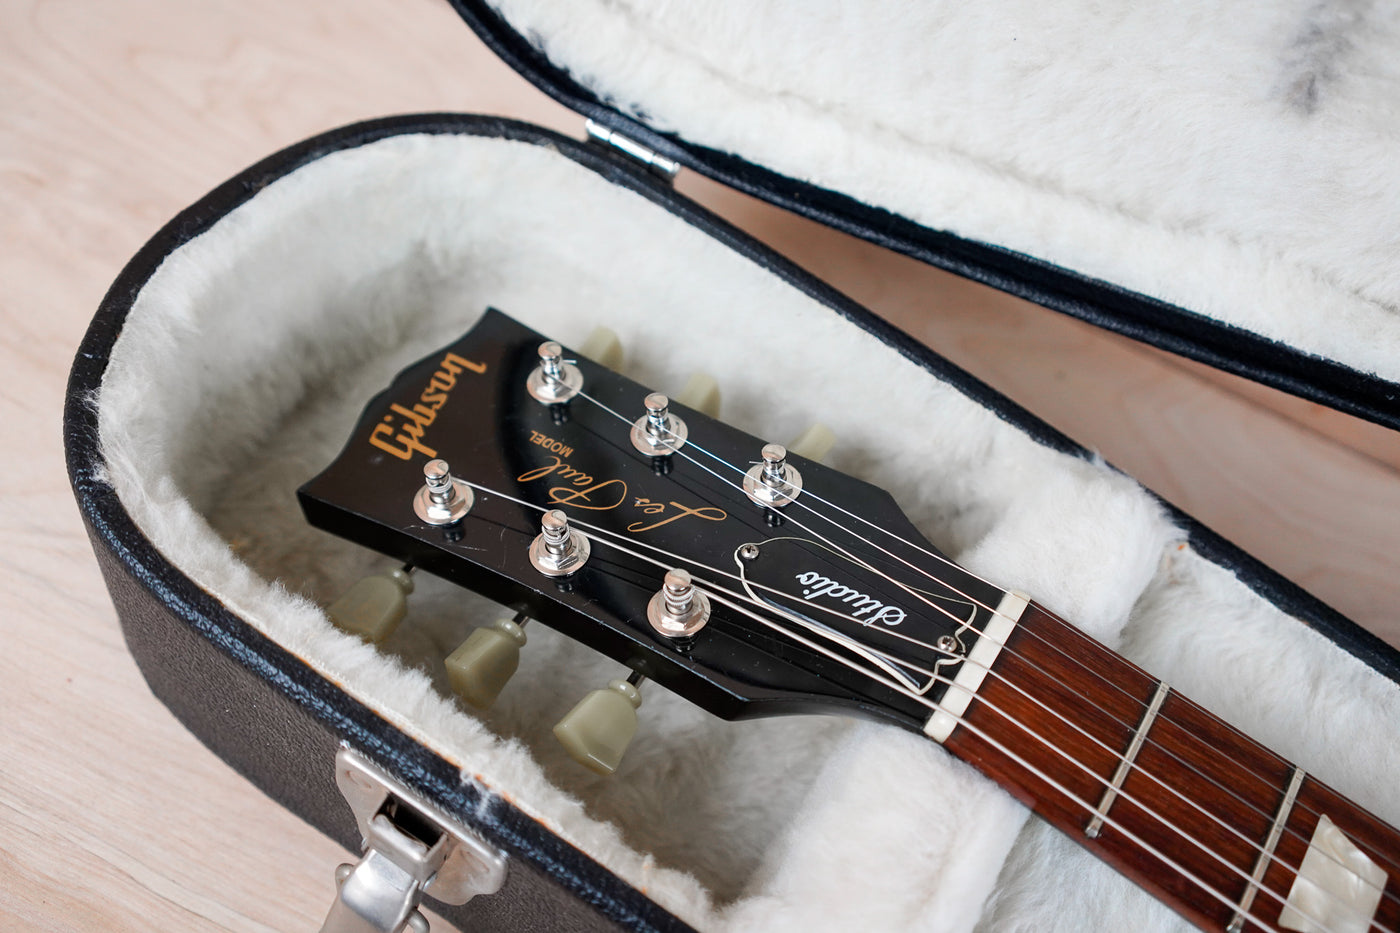 Gibson Les Paul Studio 2013 Gloss Ebony Black w/ OHSC